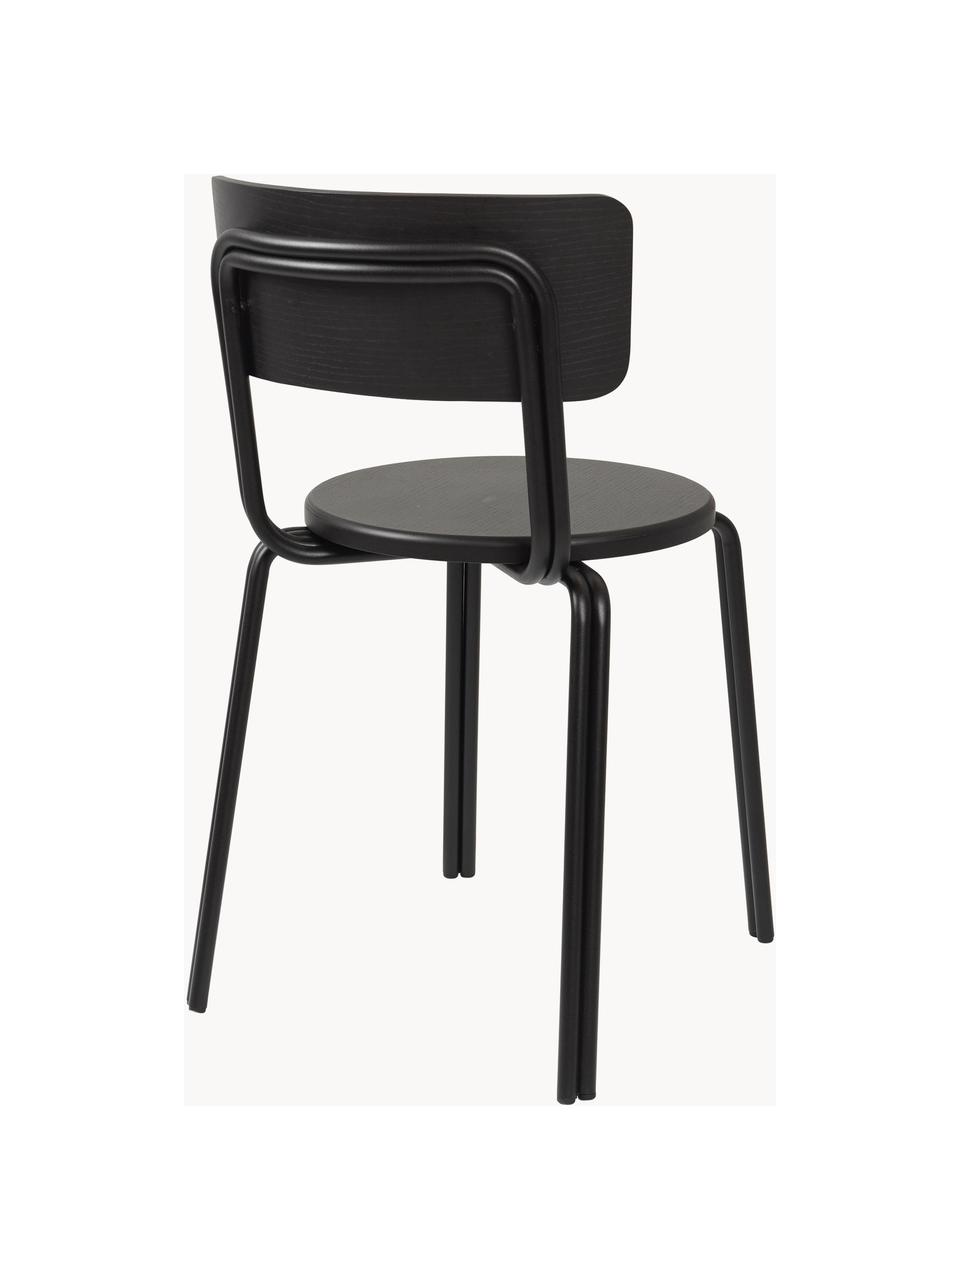 Holz-Stuhl Oda, Sitzfläche: Eschenfurnier, lackiert, Gestell: Stahl, beschichtet, Schwarz, B 42 x T 46 cm